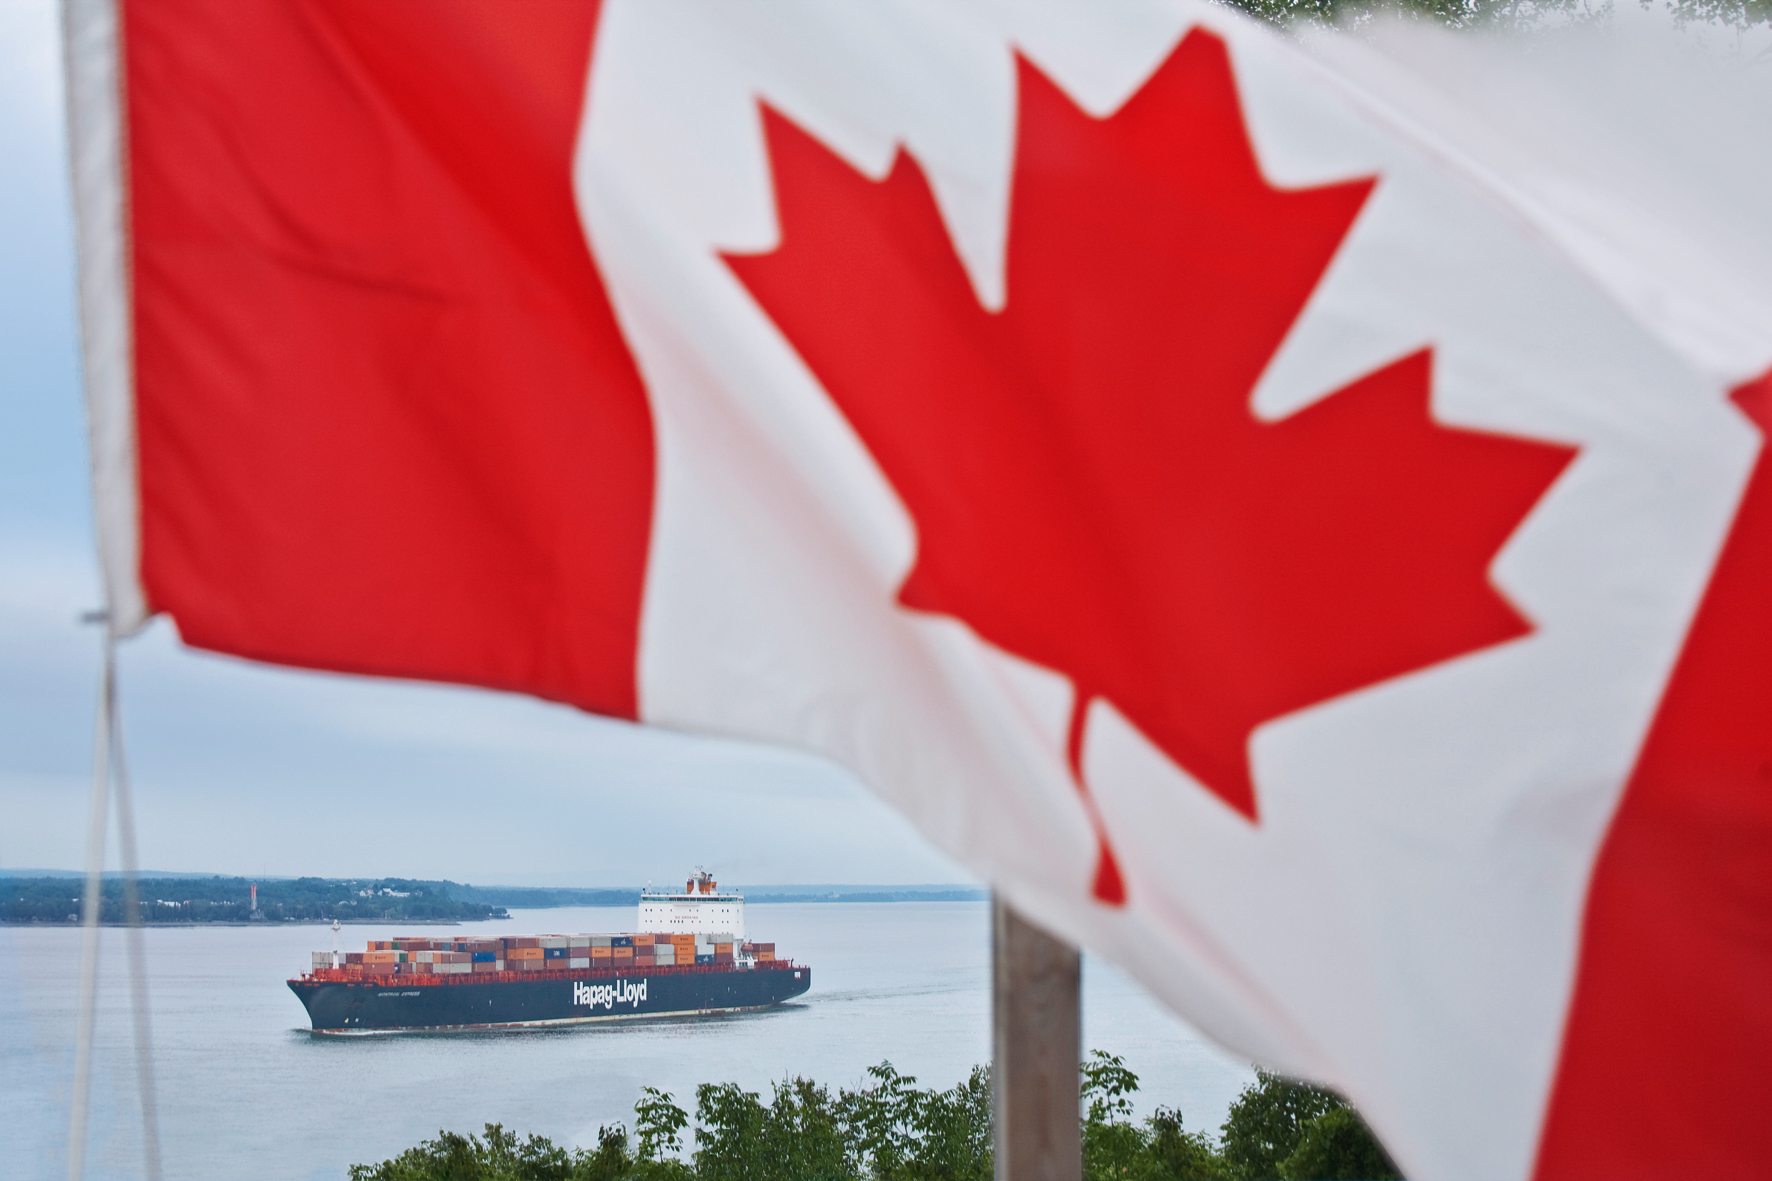 Jubiläum 125 Jahre Reederei Hapag-Lloyd in Kanada